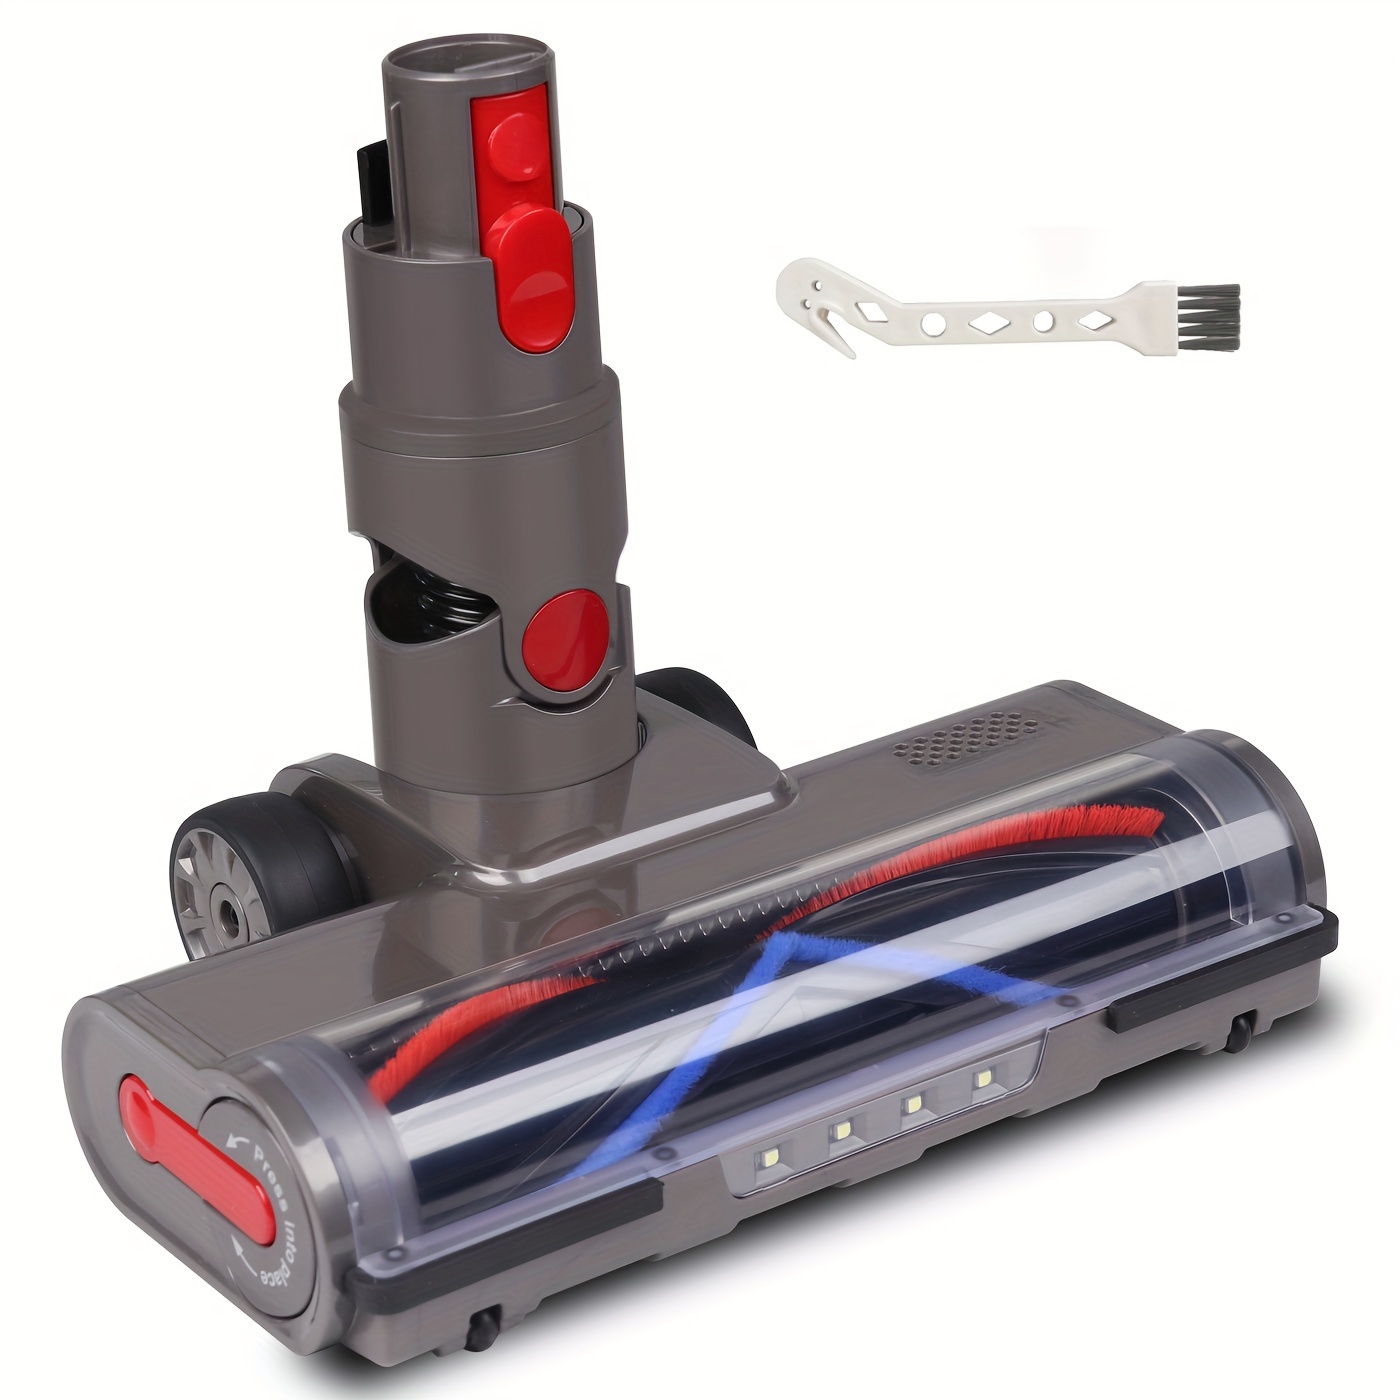  6 PCS Screwdriver Repair Tool Kits For Dyson V6 V7 V8 V10 V11  Vacuum Cleaner and Hair Dryer Attachment Parts : Home & Kitchen